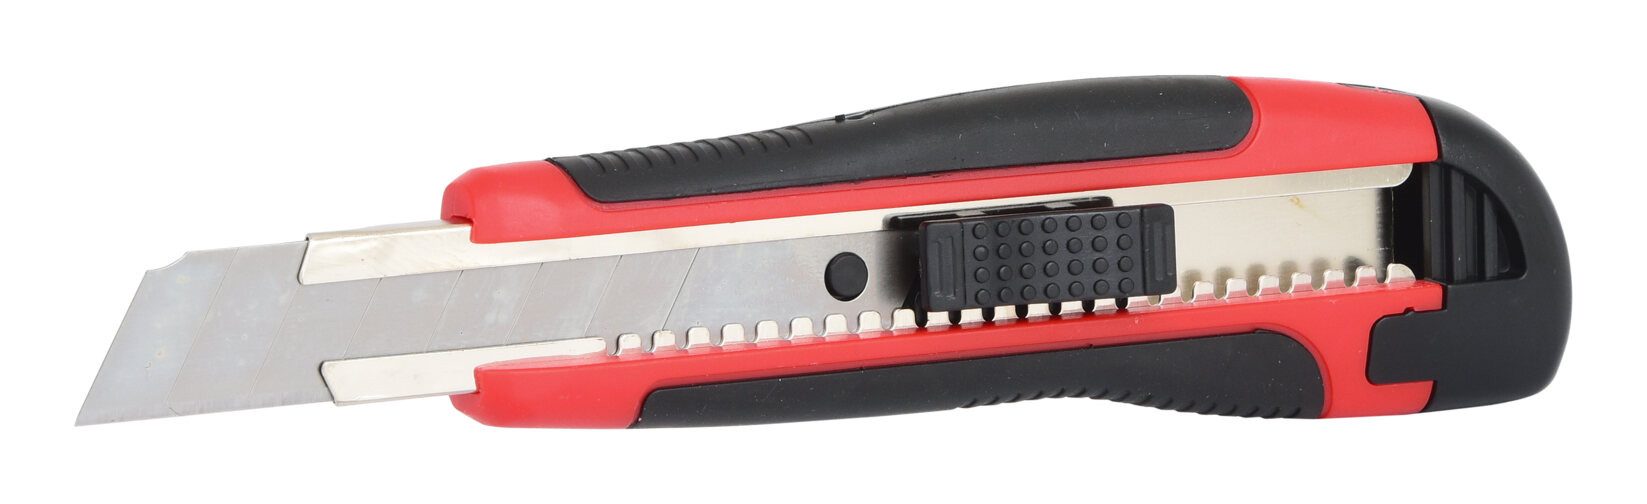 KS Tools Cuttermesser, Klinge: 1.8 cm, Universal-Abbrechklingen, 165 mm, Klinge 18 x 100 mm